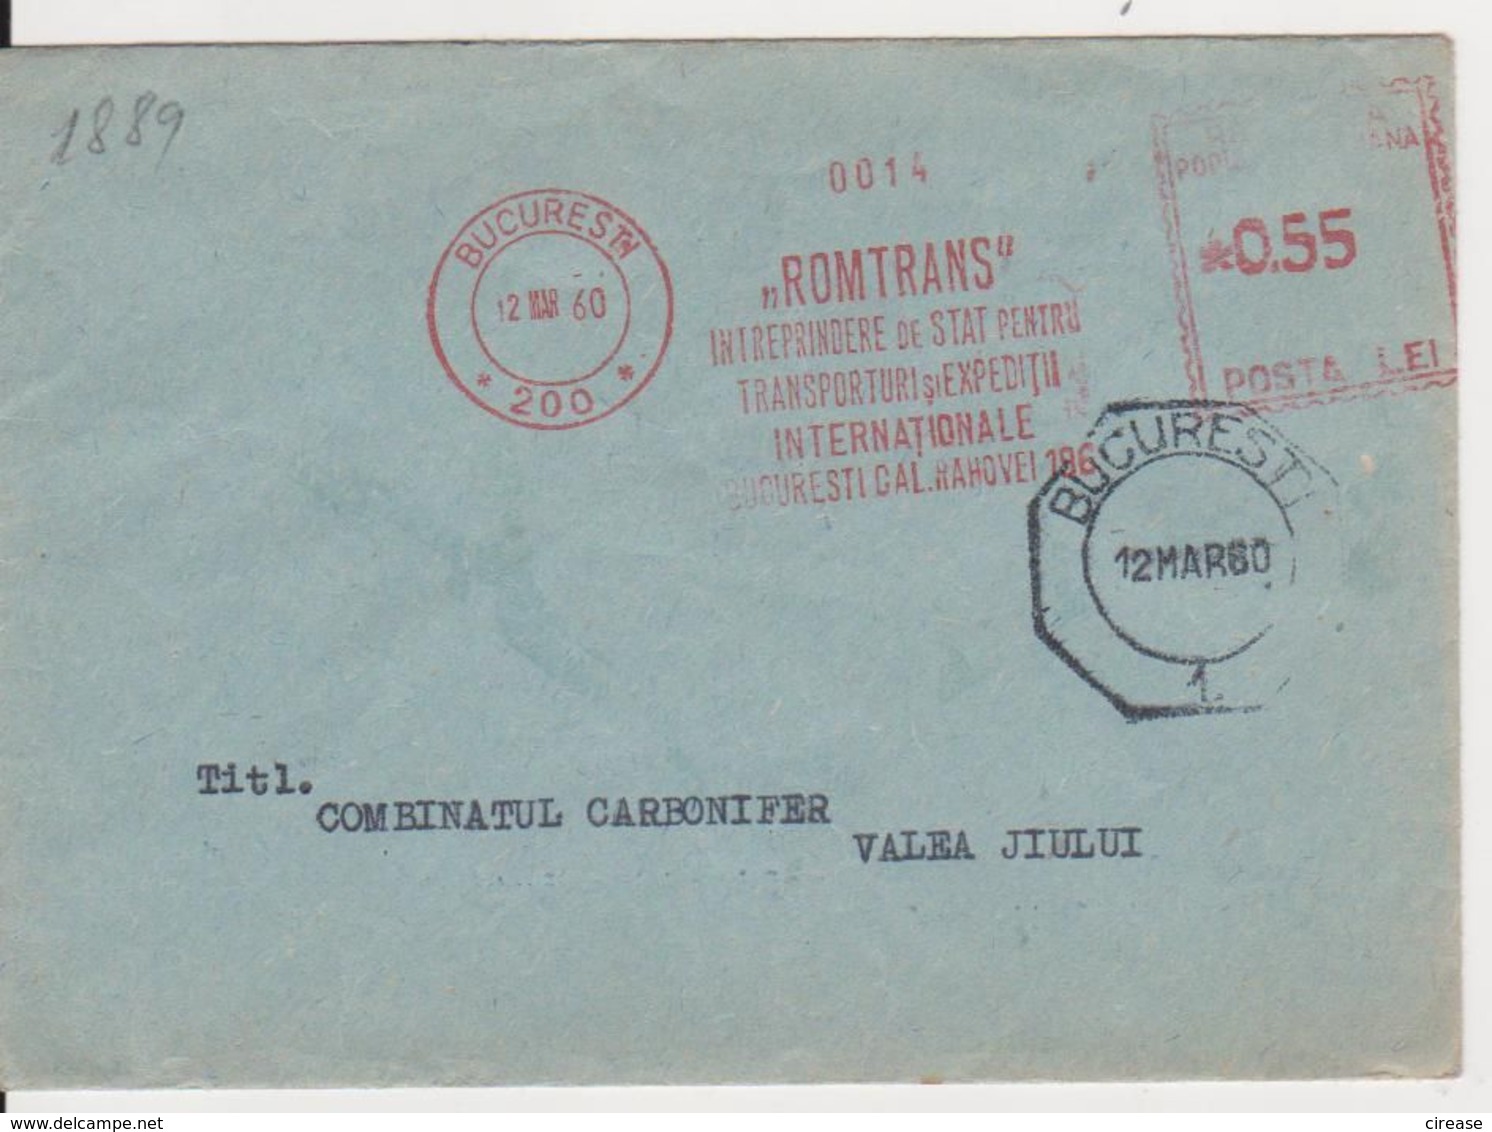 BUCURESTI AMONT 0,55, ROMTRANS INTERNATIONAL TRANSPORT RED MACHINE ATM STAMPS, ROMANIA 1960 - Maschinenstempel (EMA)